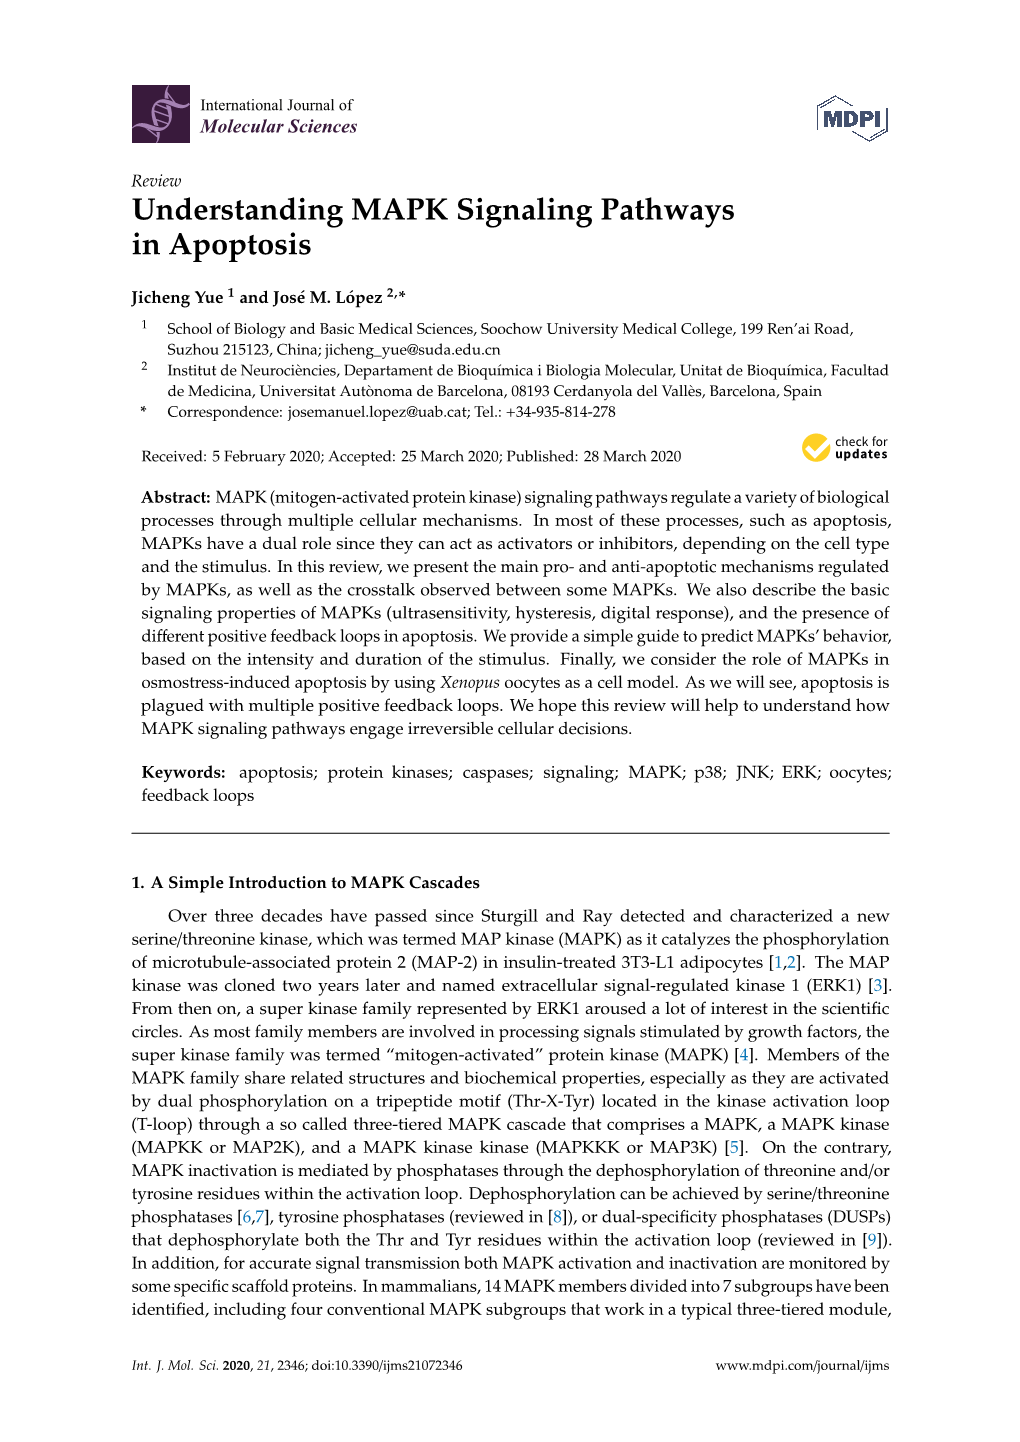 Understanding MAPK Signaling Pathways in Apoptosis